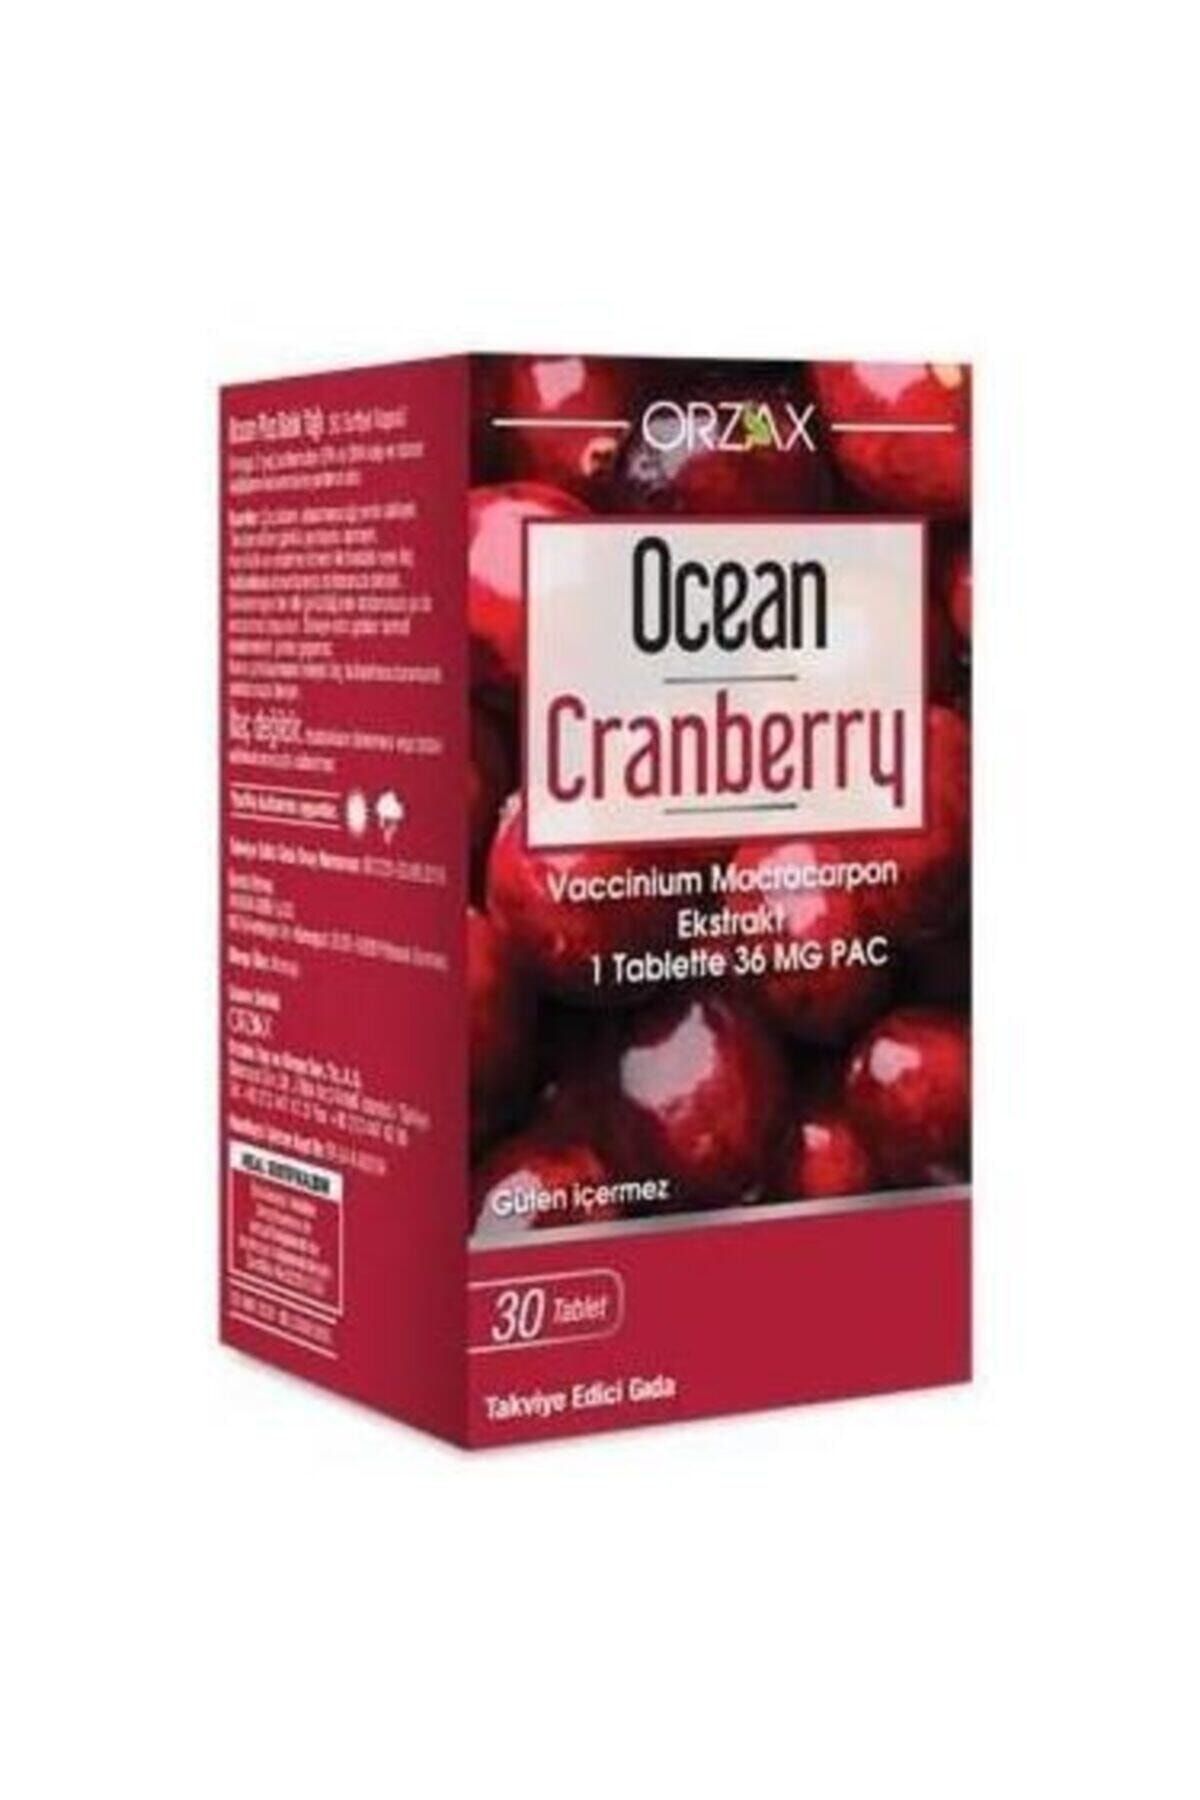 Ocean Ocean Cranberry 30 Kapsul